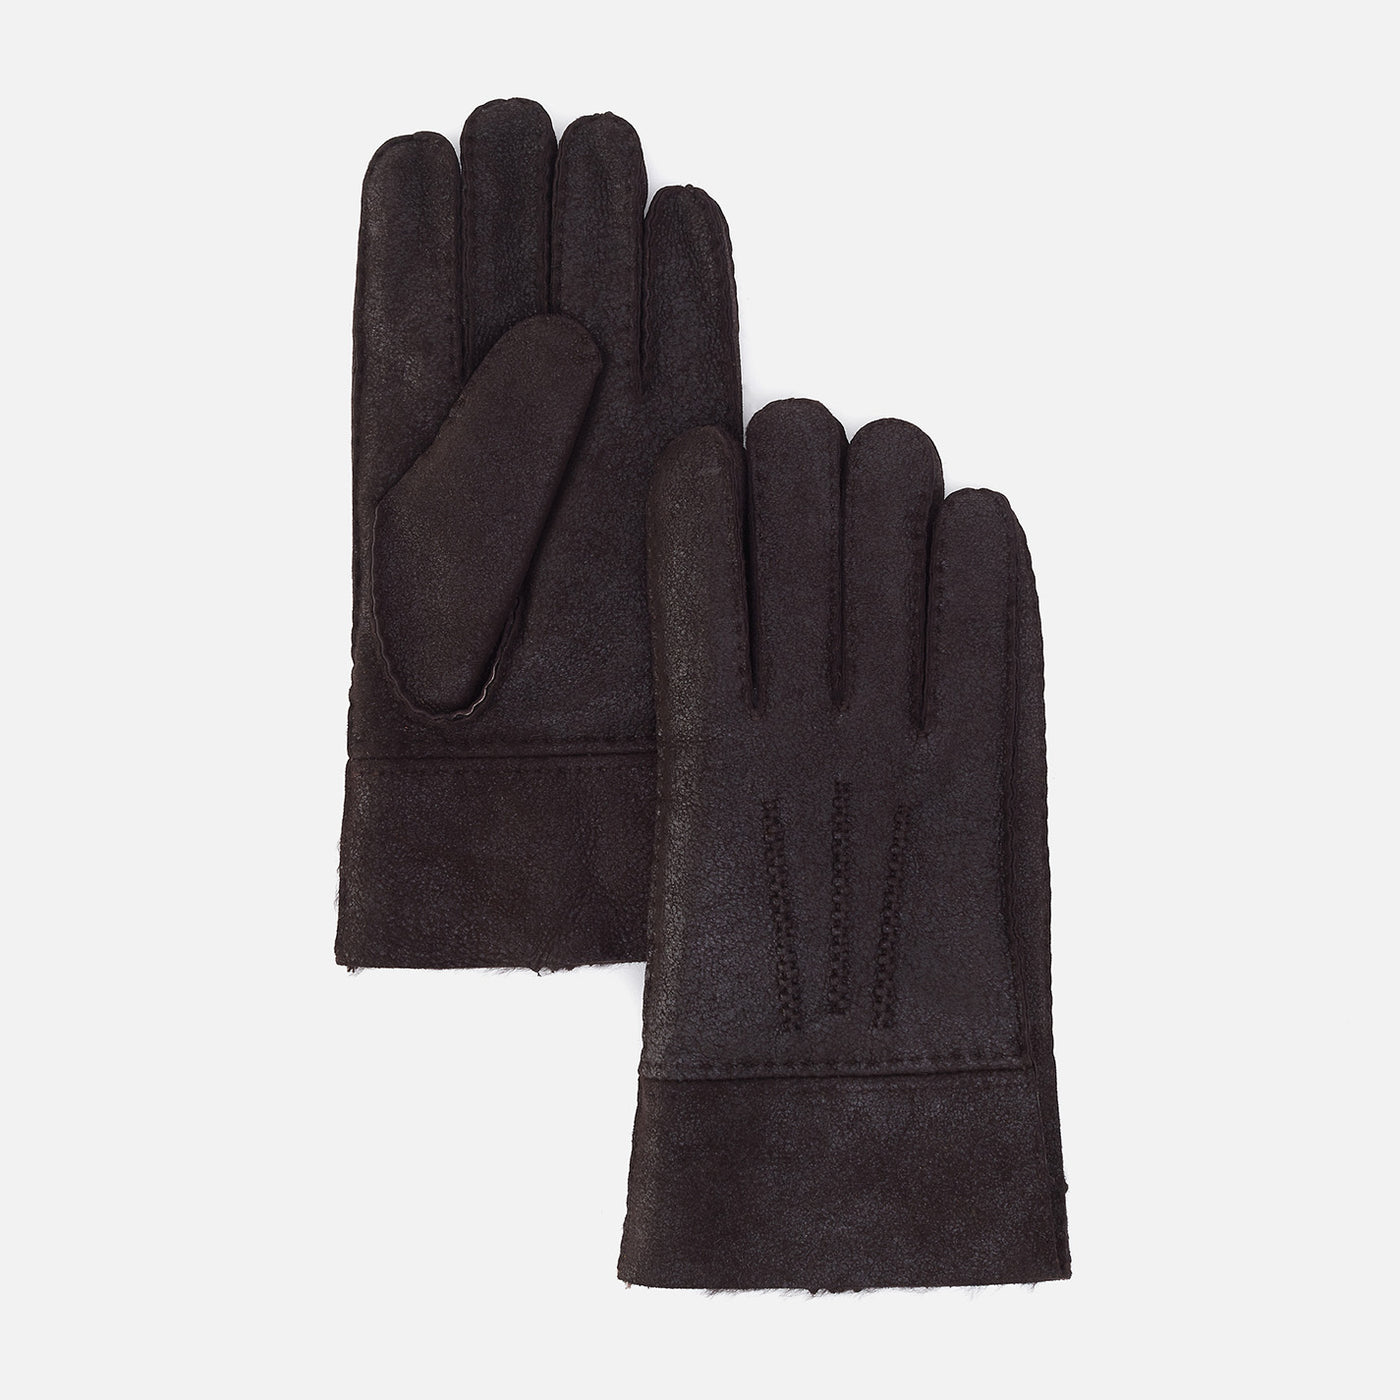 Rugged Black Aviator Sheepskin Glove in Aston Leather - M